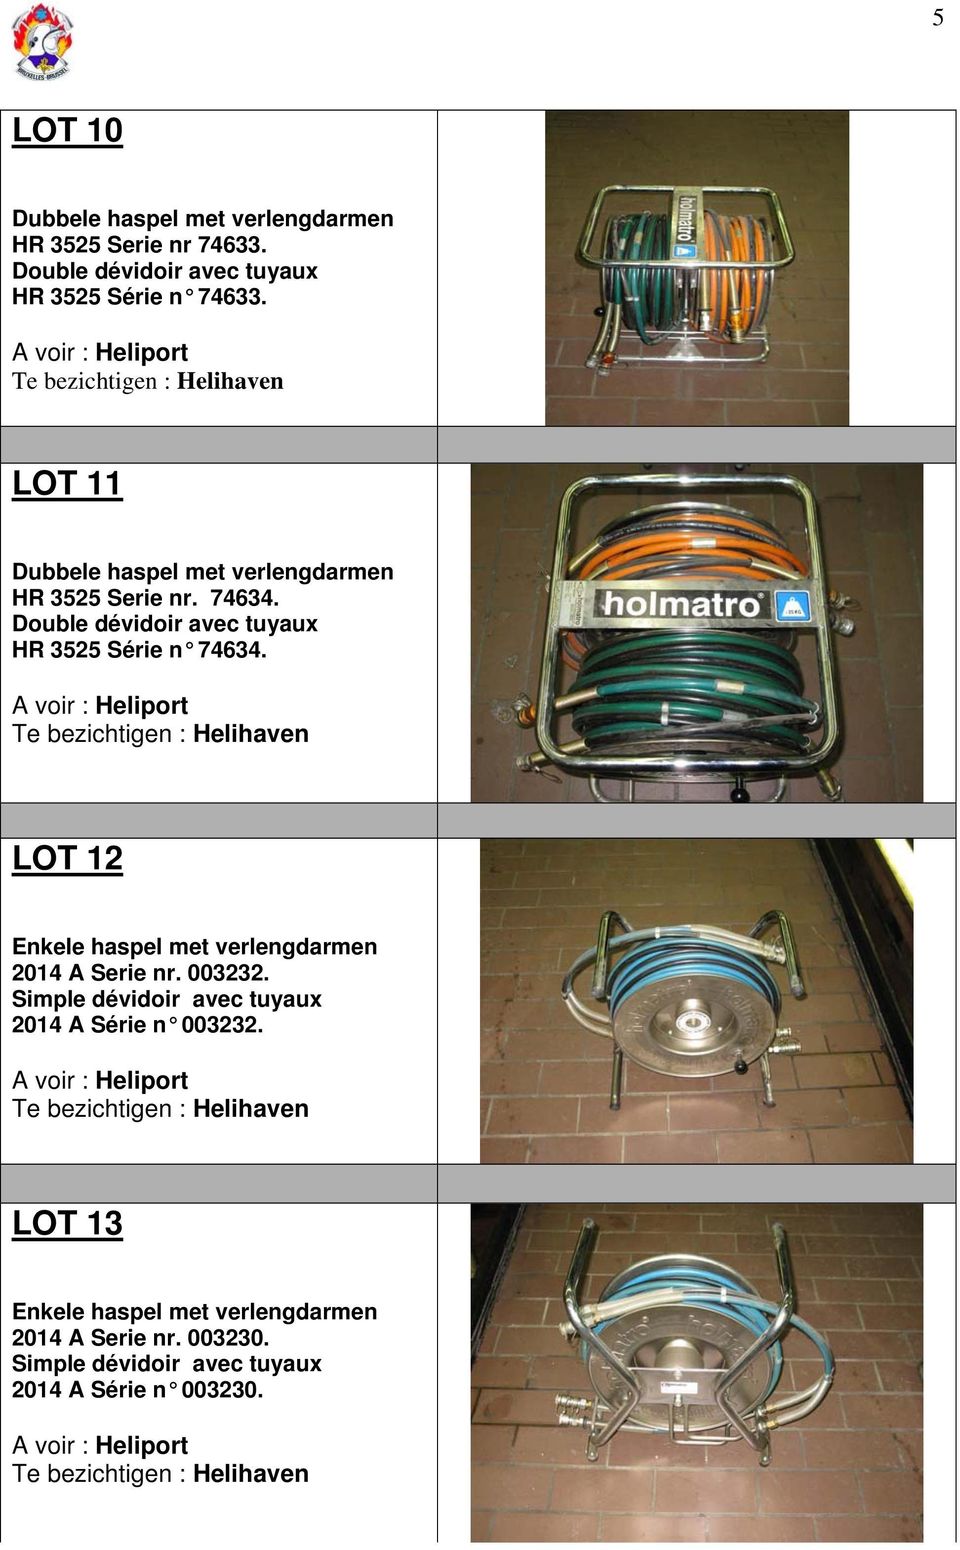 LOT 12 Enkele haspel met verlengdarmen 2014 A Serie nr. 003232. Simple dévidoir avec tuyaux 2014 A Série n 003232.